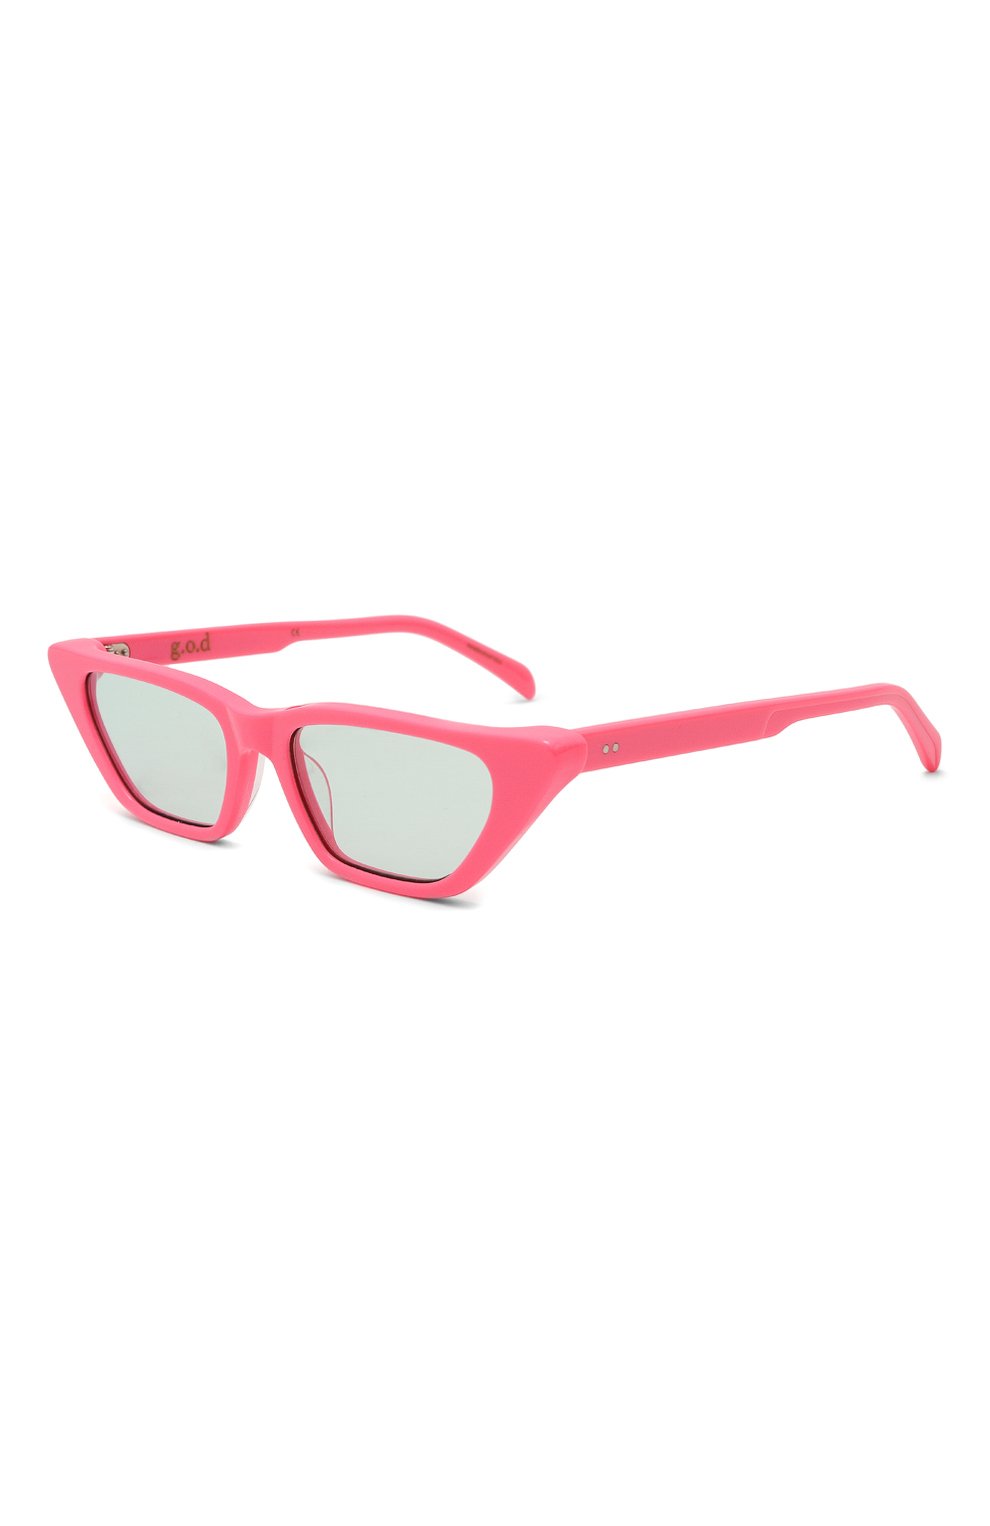 Женские солнцезащитные очки G.O.D. EYEWEAR розового цвета, арт. THIRTY TW0 B0NB0N/GREEN | Фото 1 (Тип очков: С/з; Оптика Гендер: оптика-женское; Очки форма: Cat-eye, Пр ямоугольные)